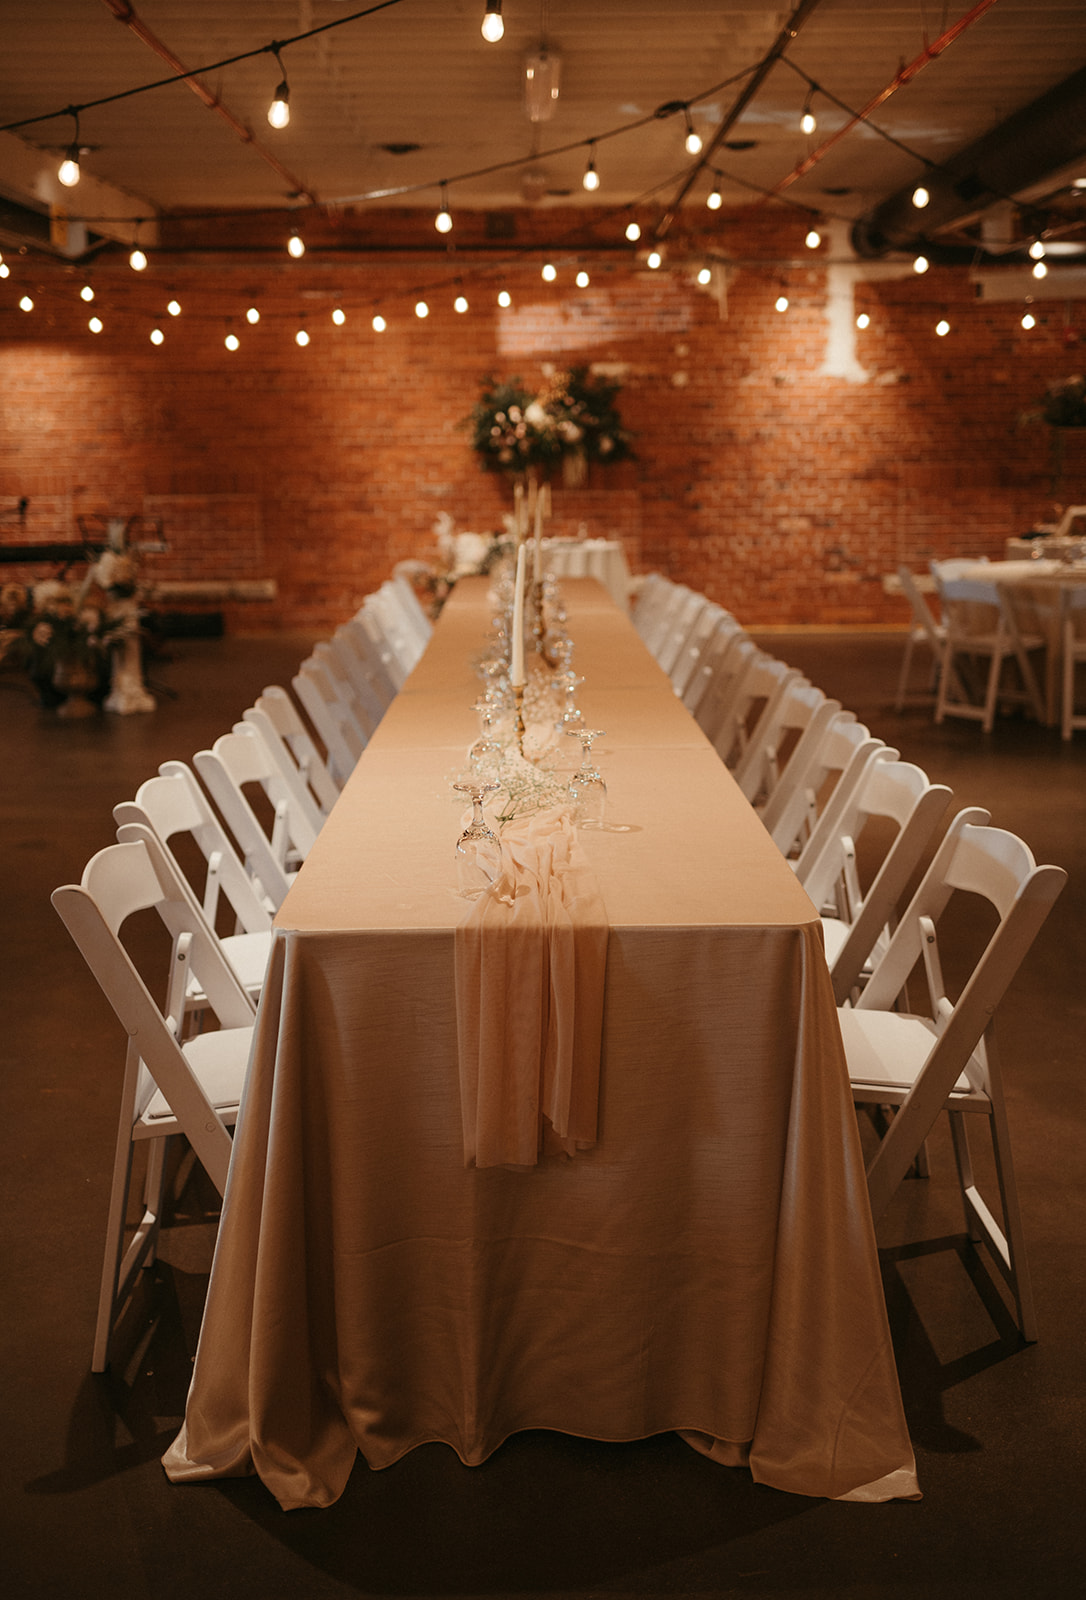 Wedding table setup in earth tones, vintage wedding decor